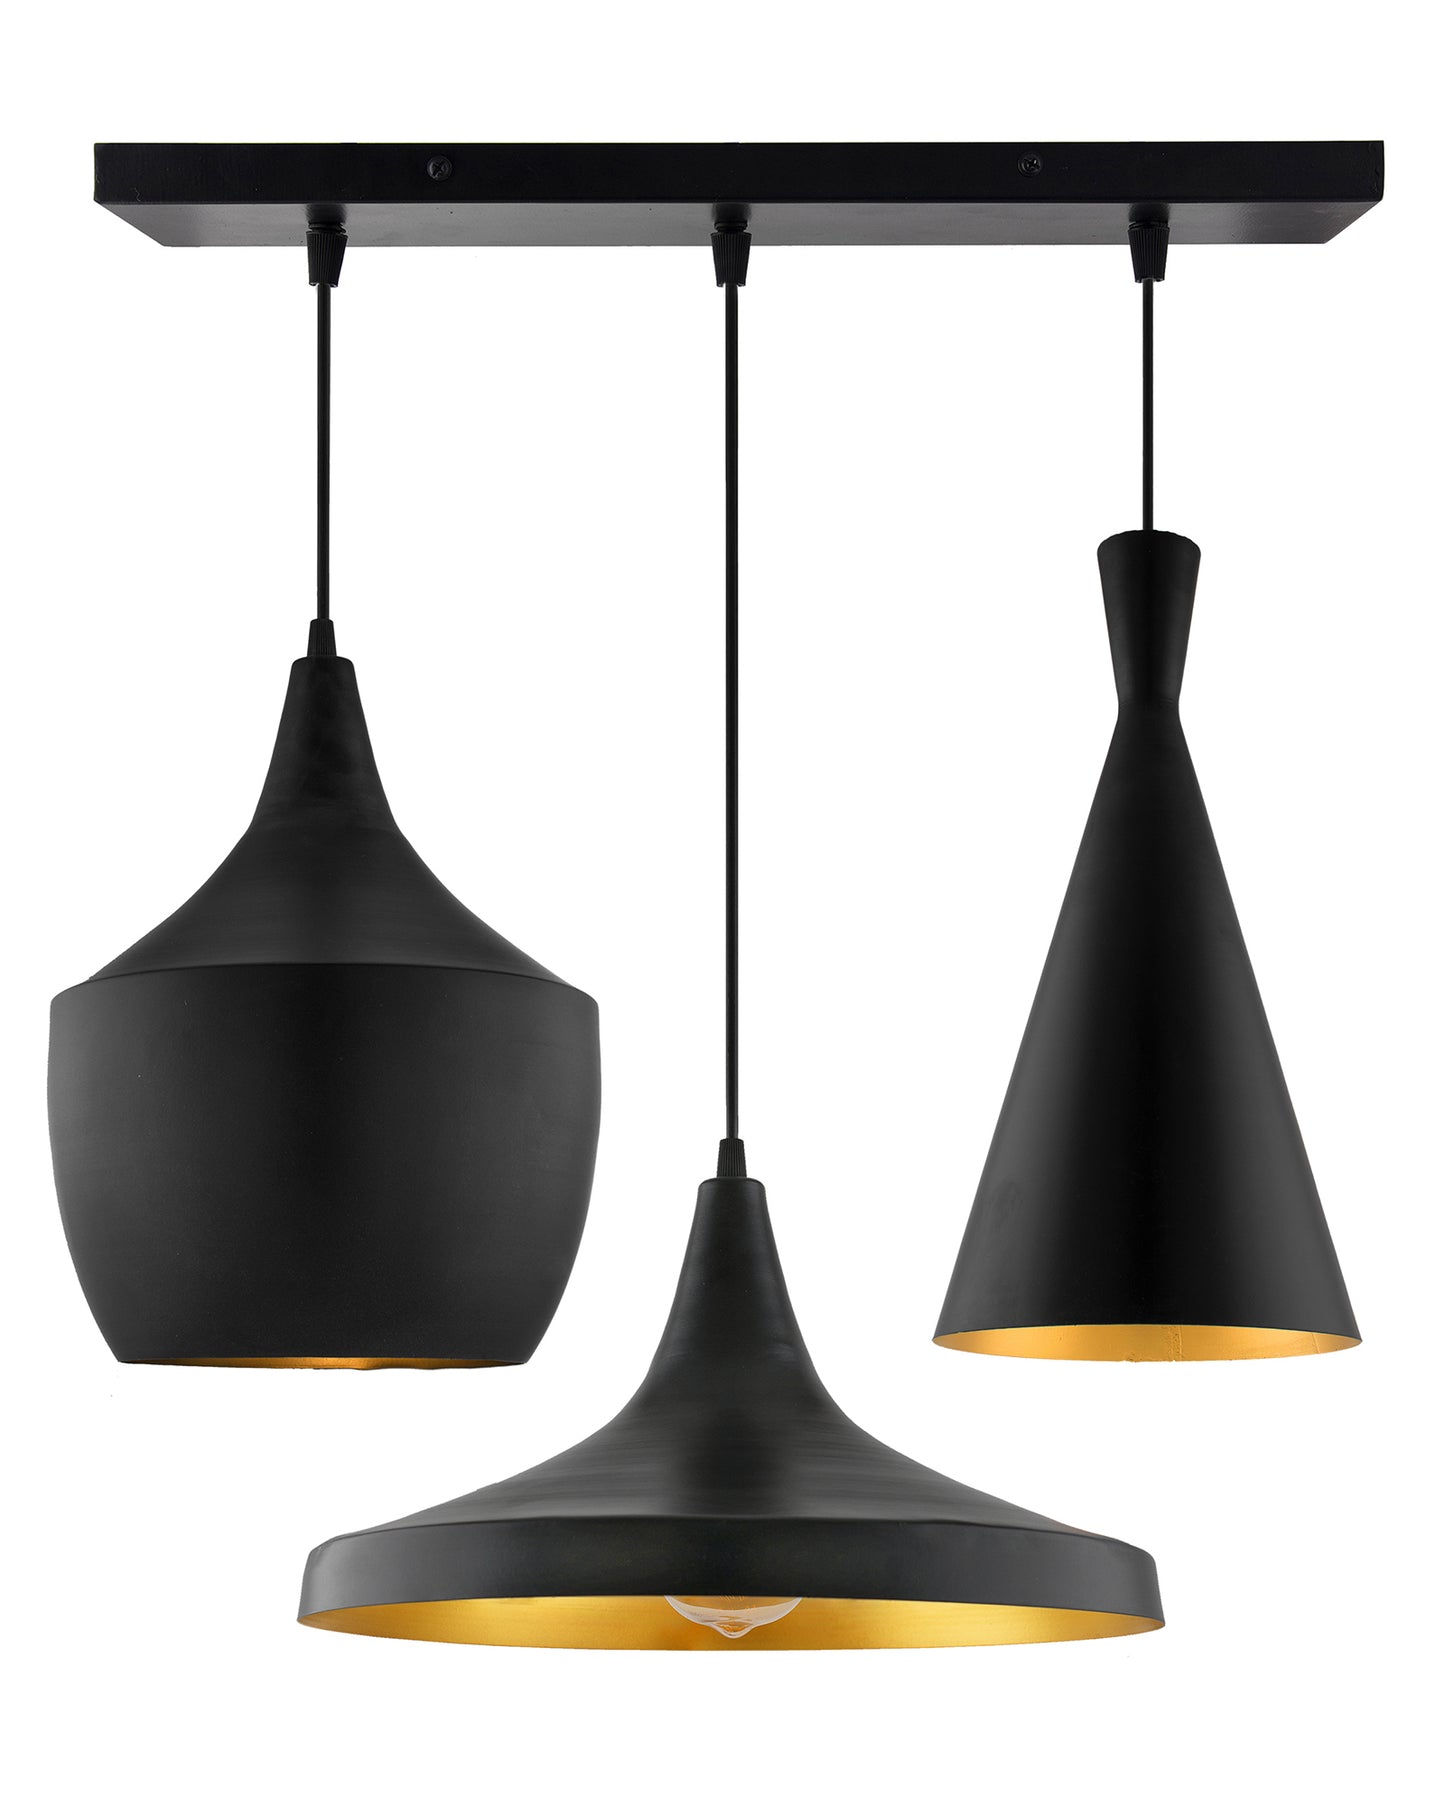 3-Lights Linear Cluster Chandelier Modern Tri-Nordic hanging Light, E27 Holder, Decorative, URBAN Retro, Nordic Style